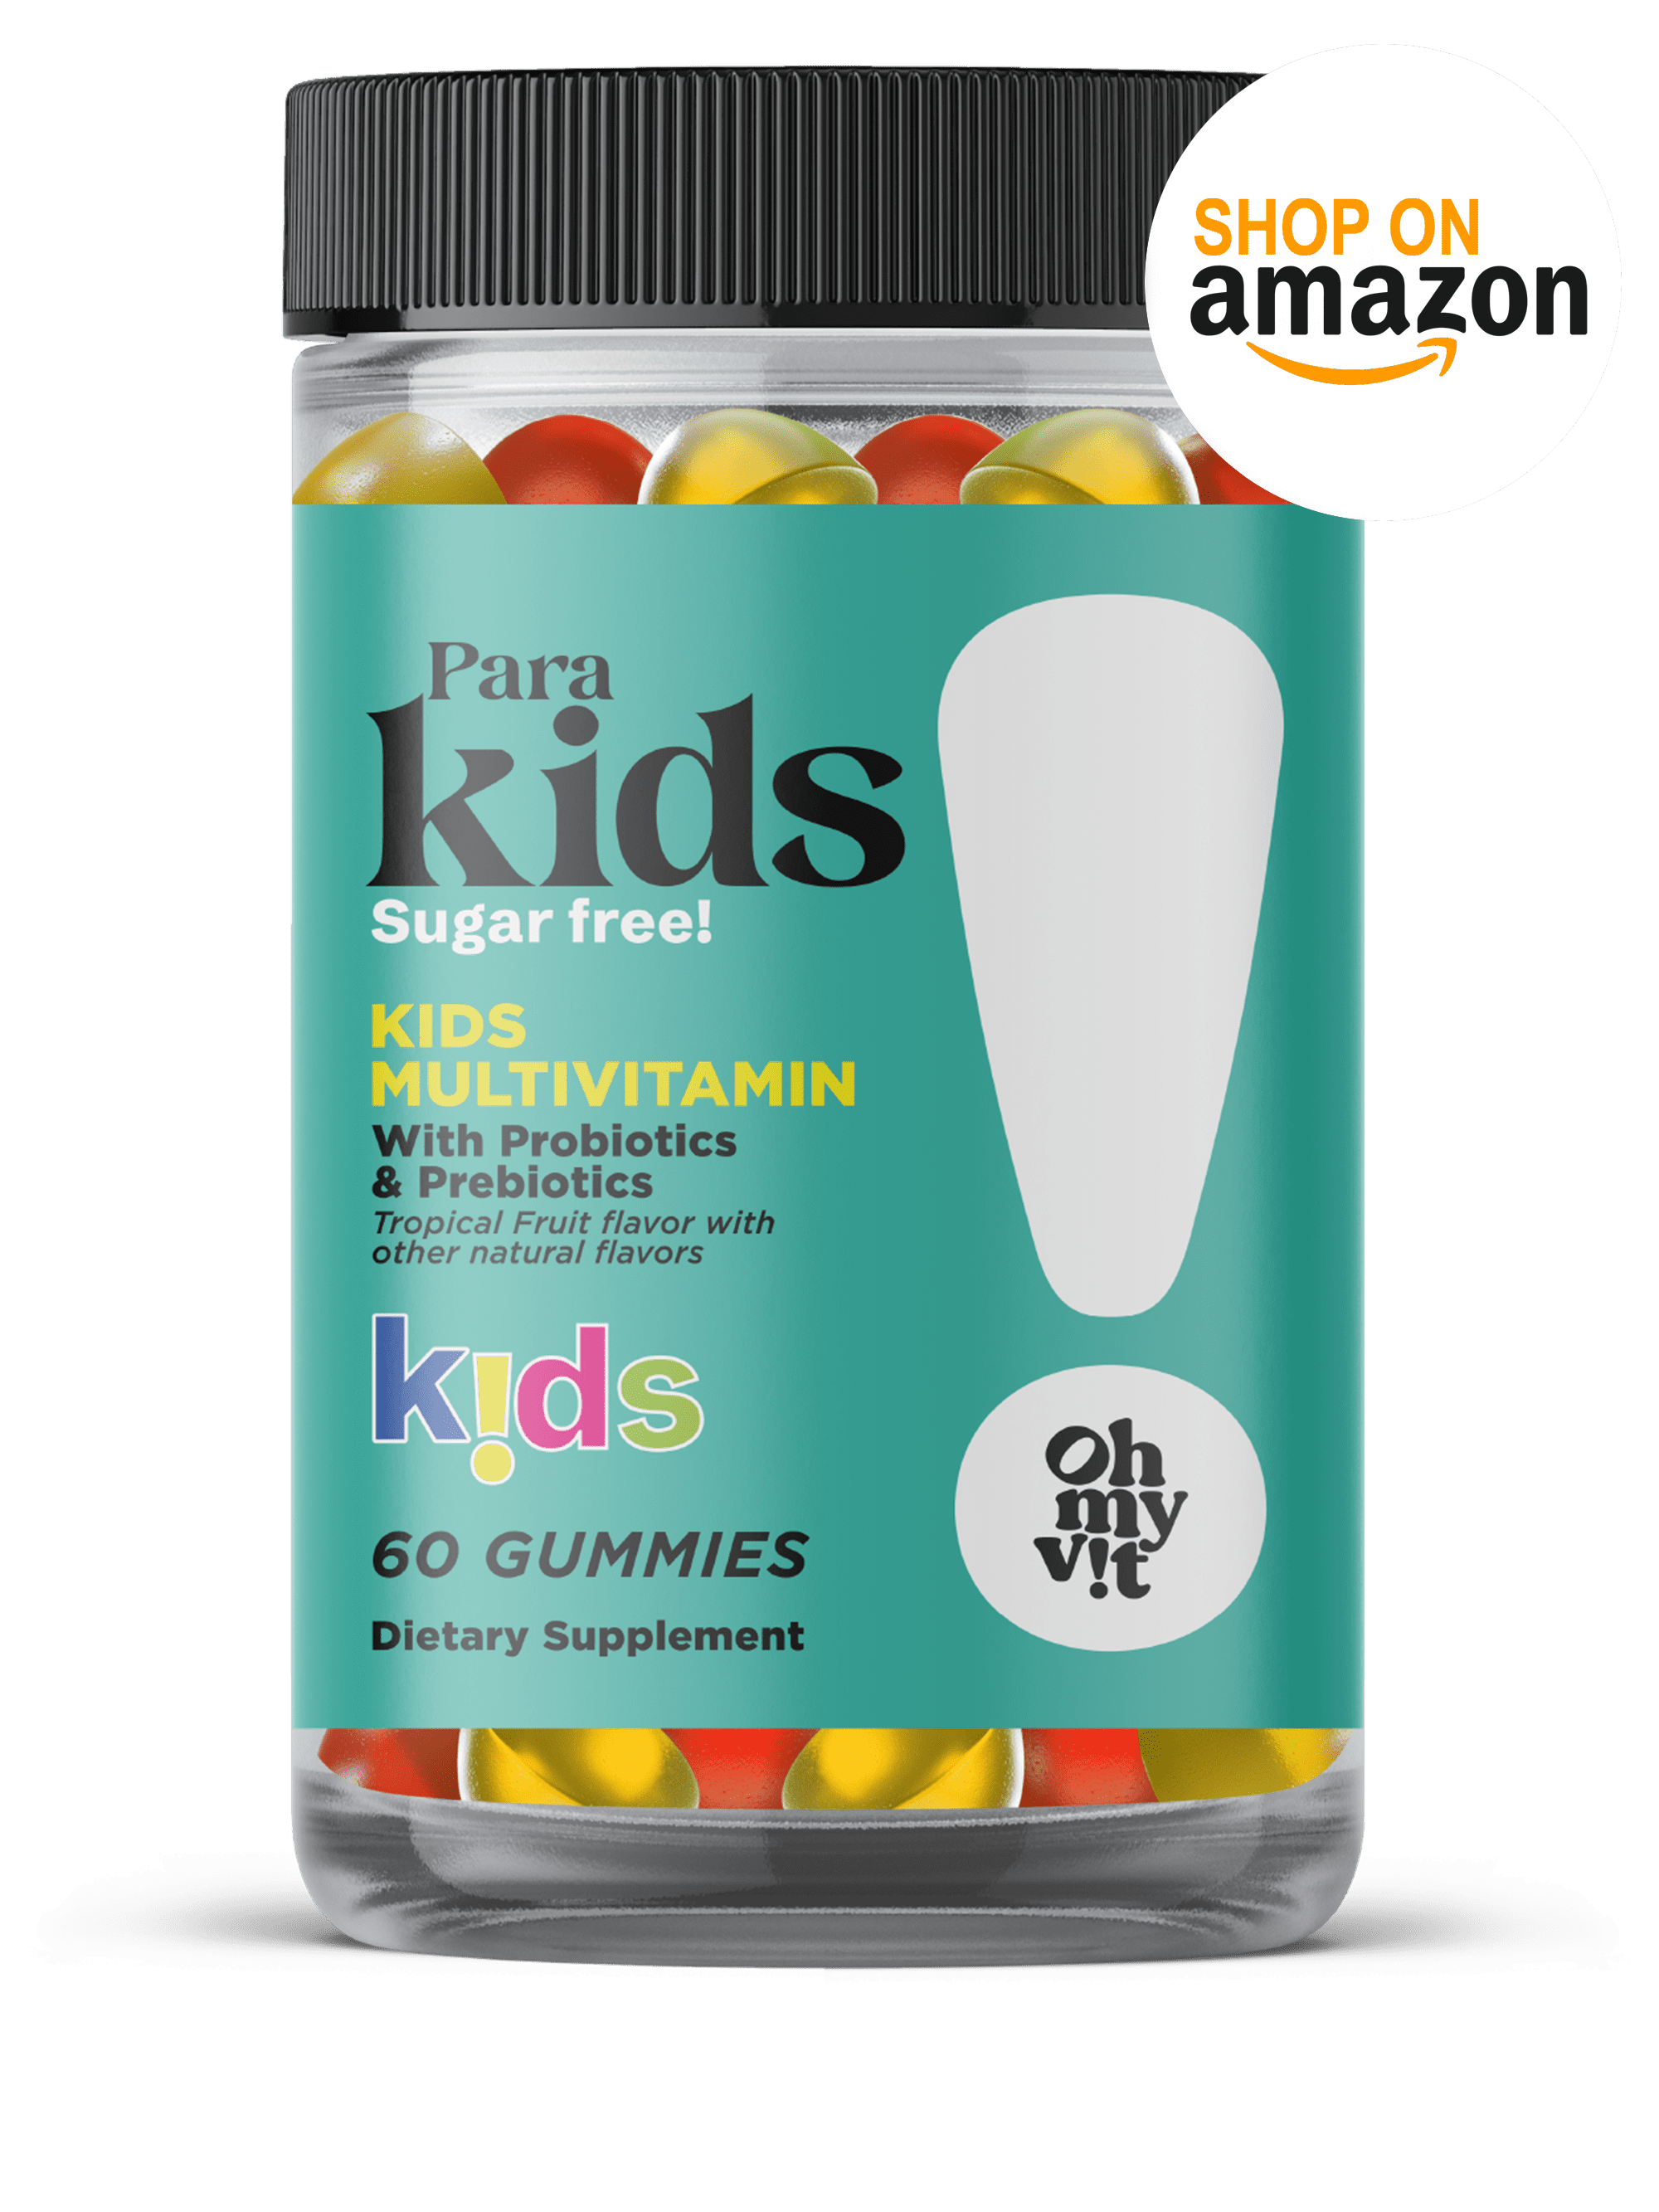 Para Kids - Multivitamins for Kids